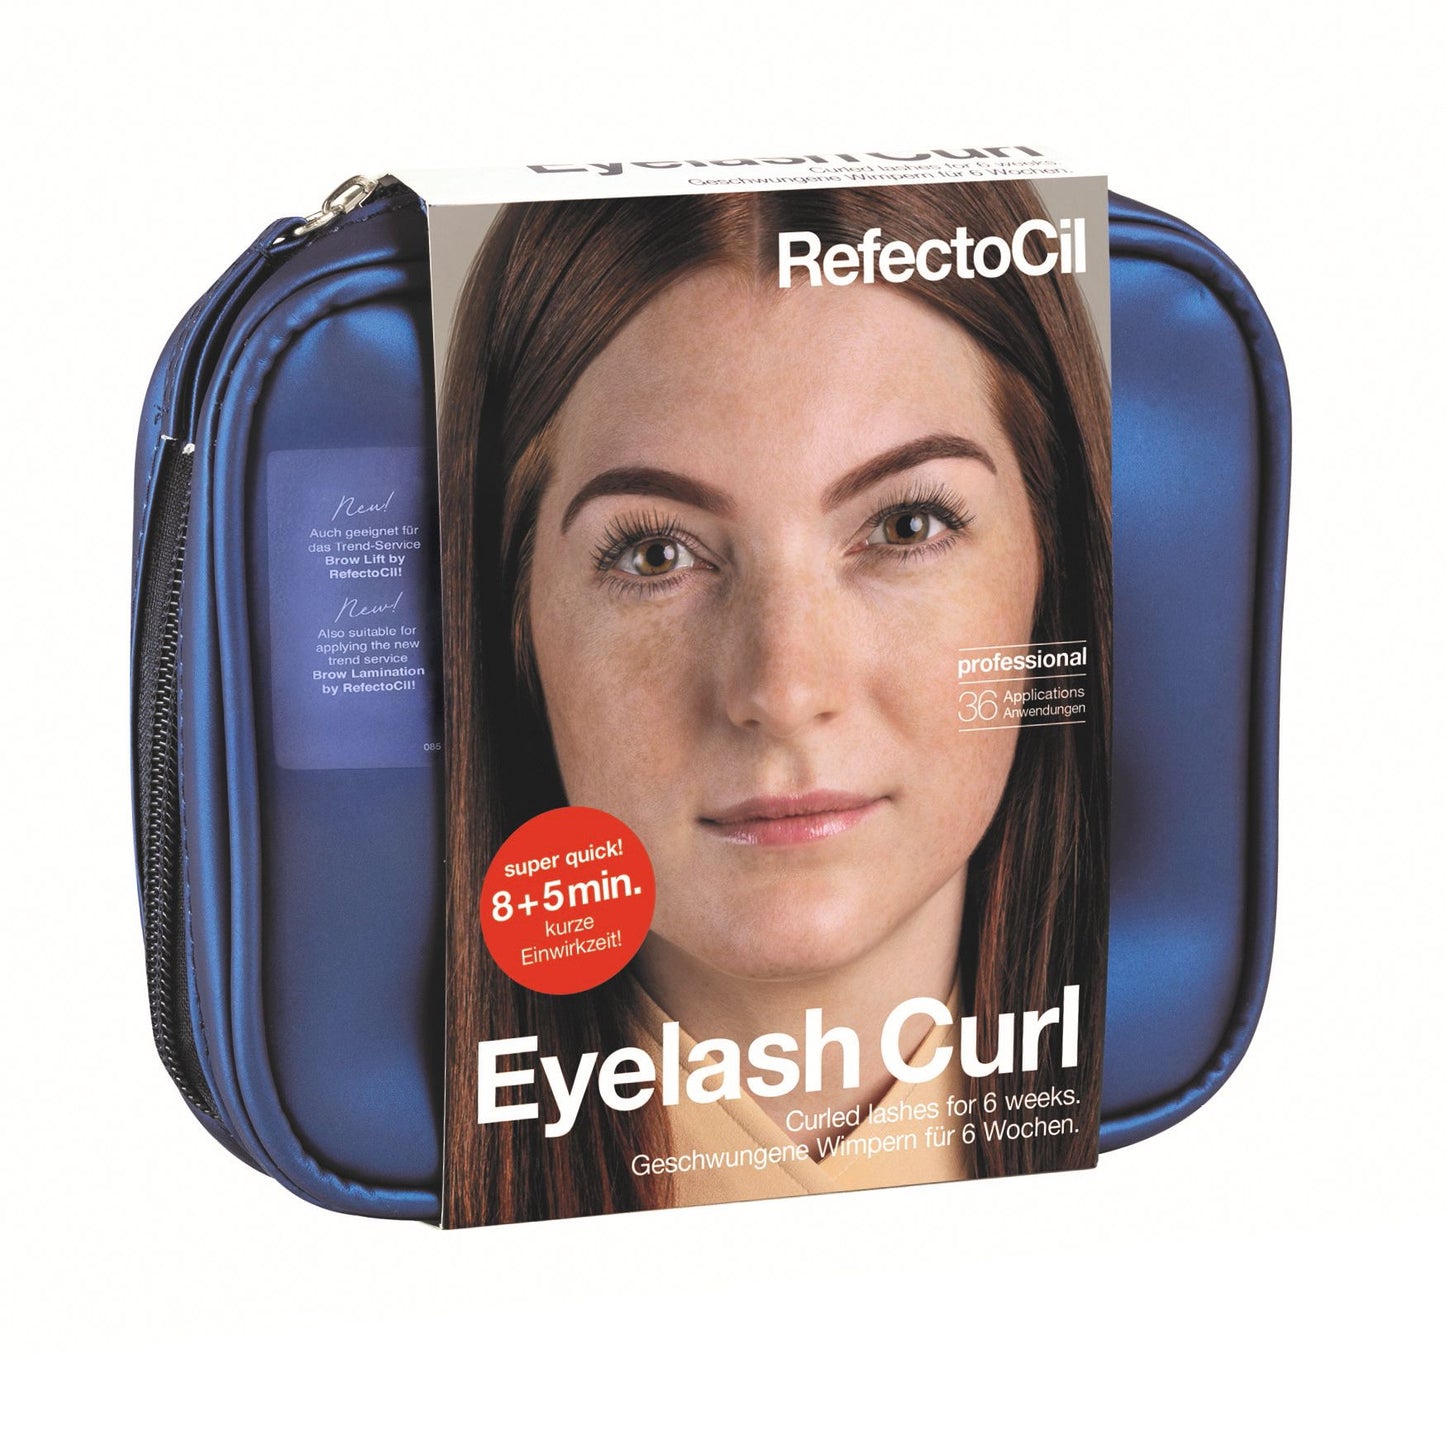 RefectoCil Eyelash Curl -36 Applications